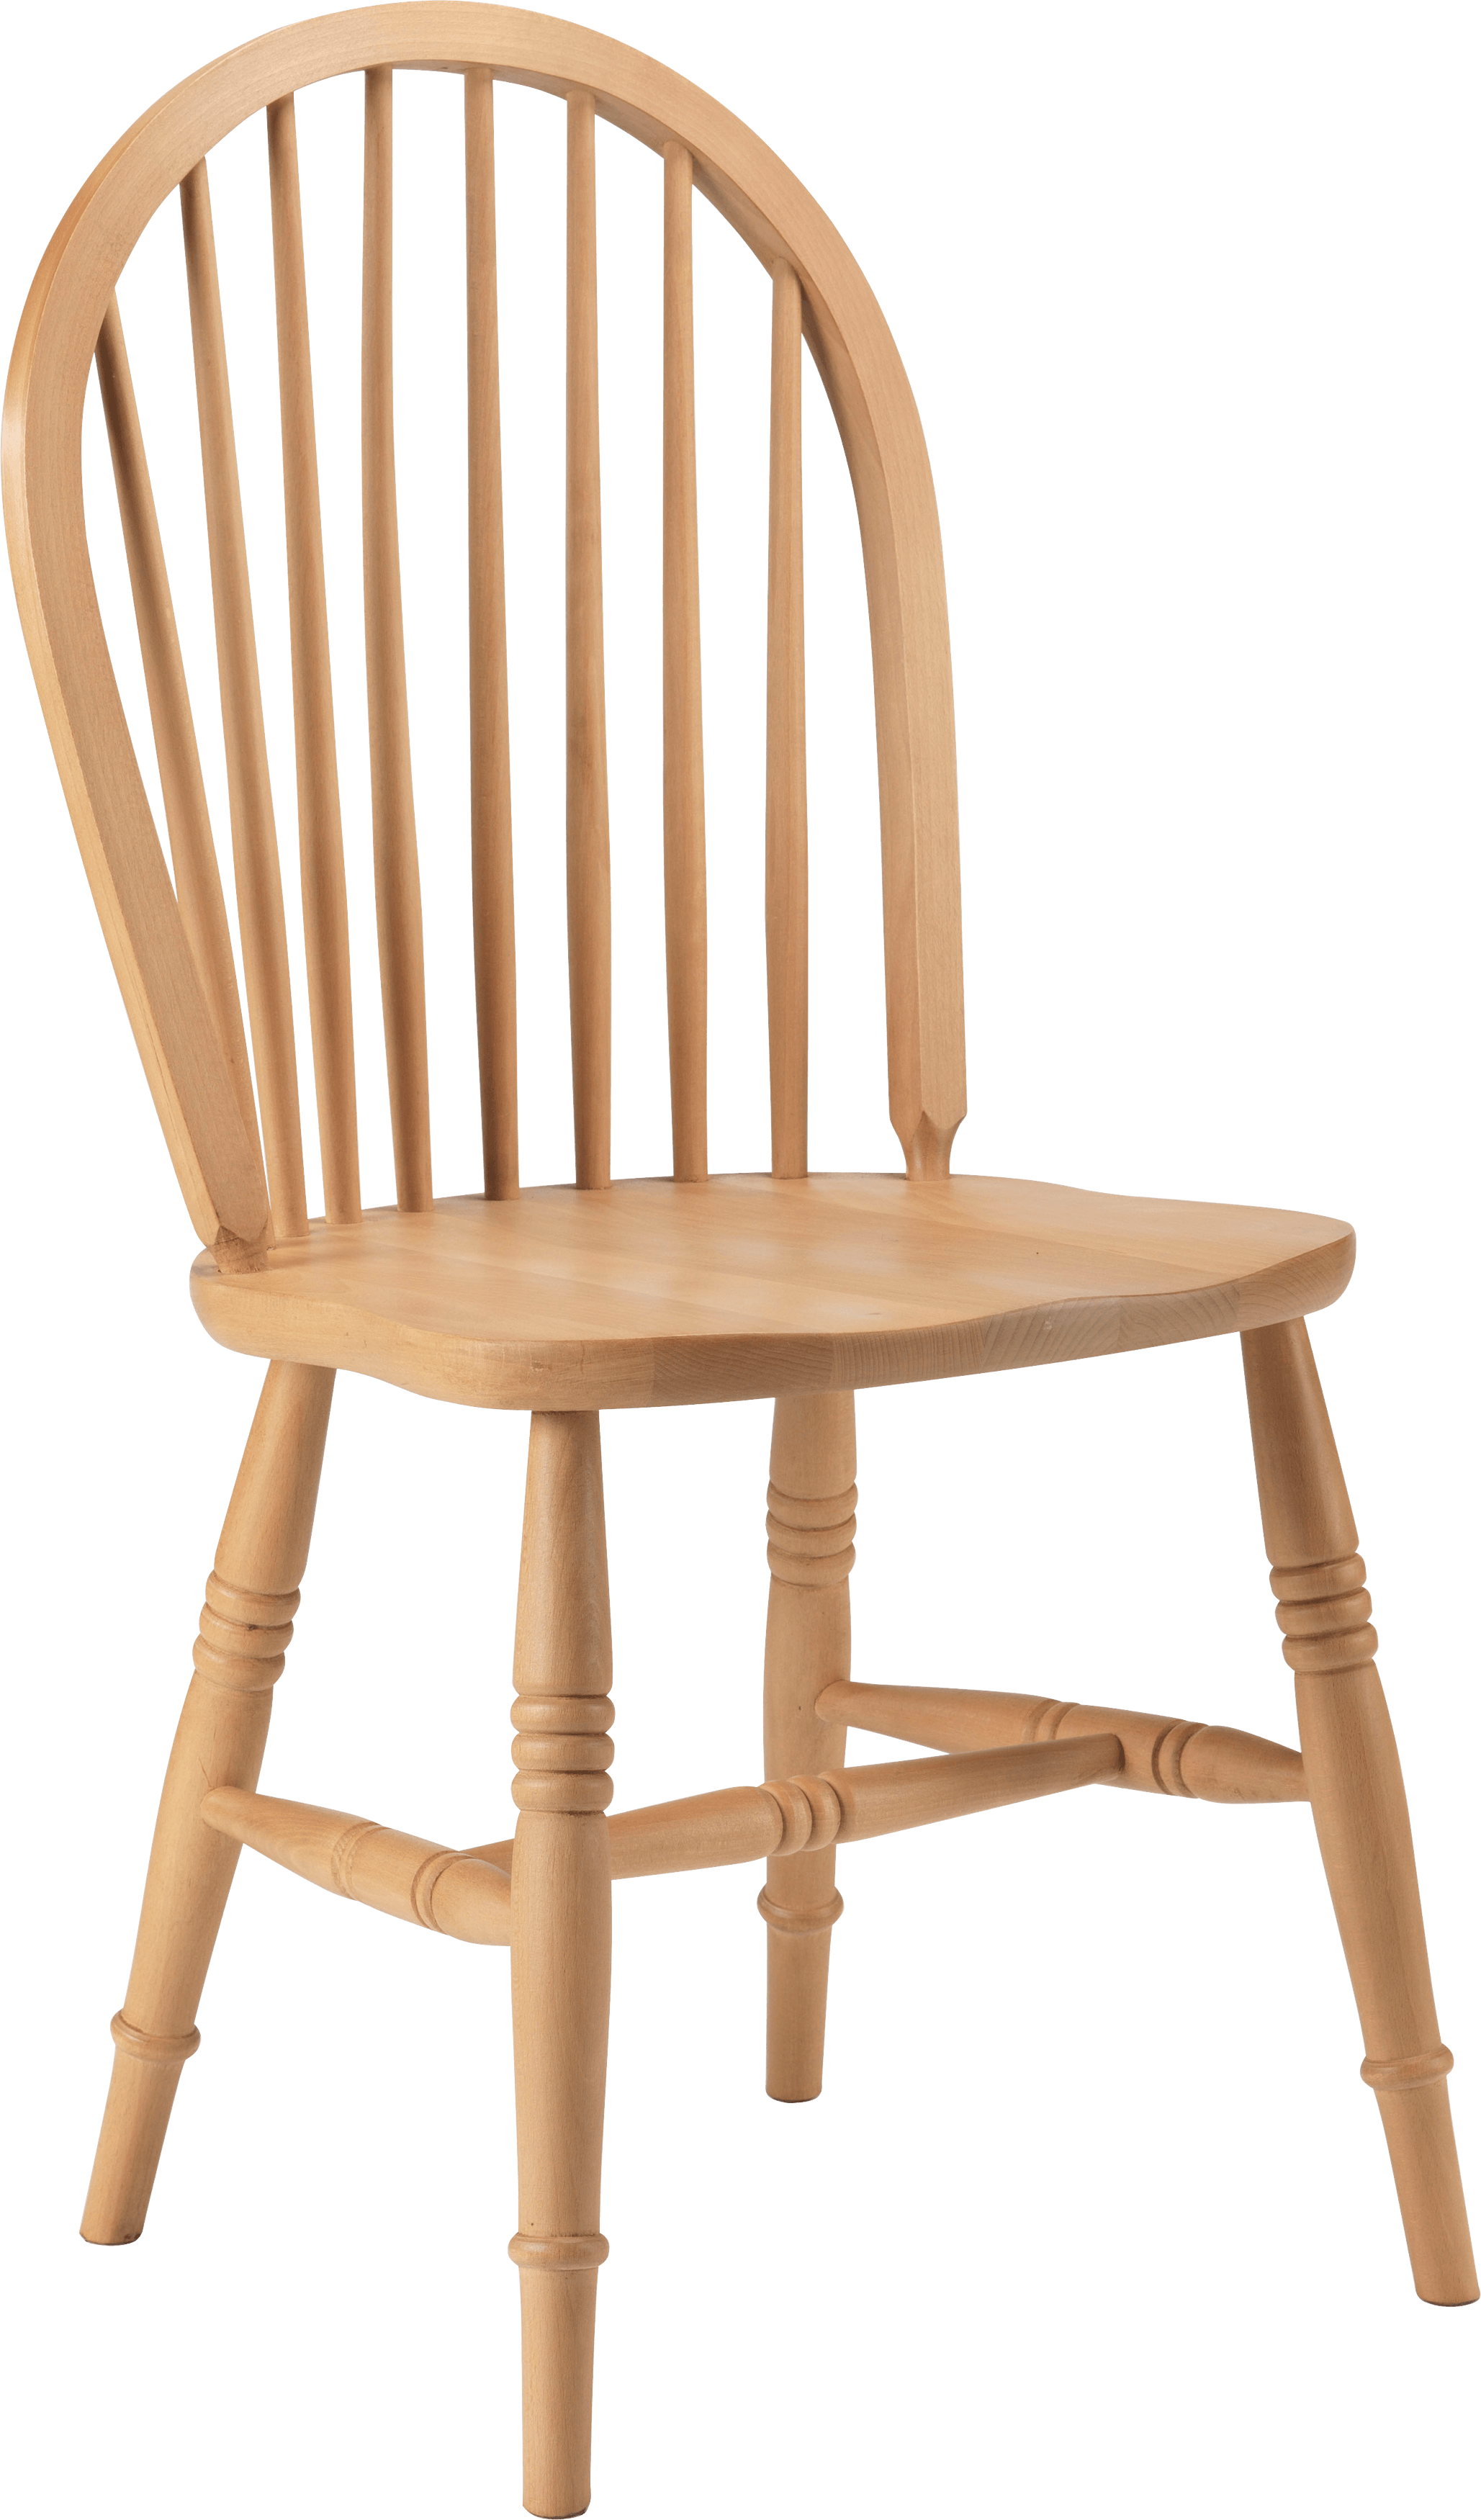 Chair Stylized Pasturage Shop Grasslands PNG